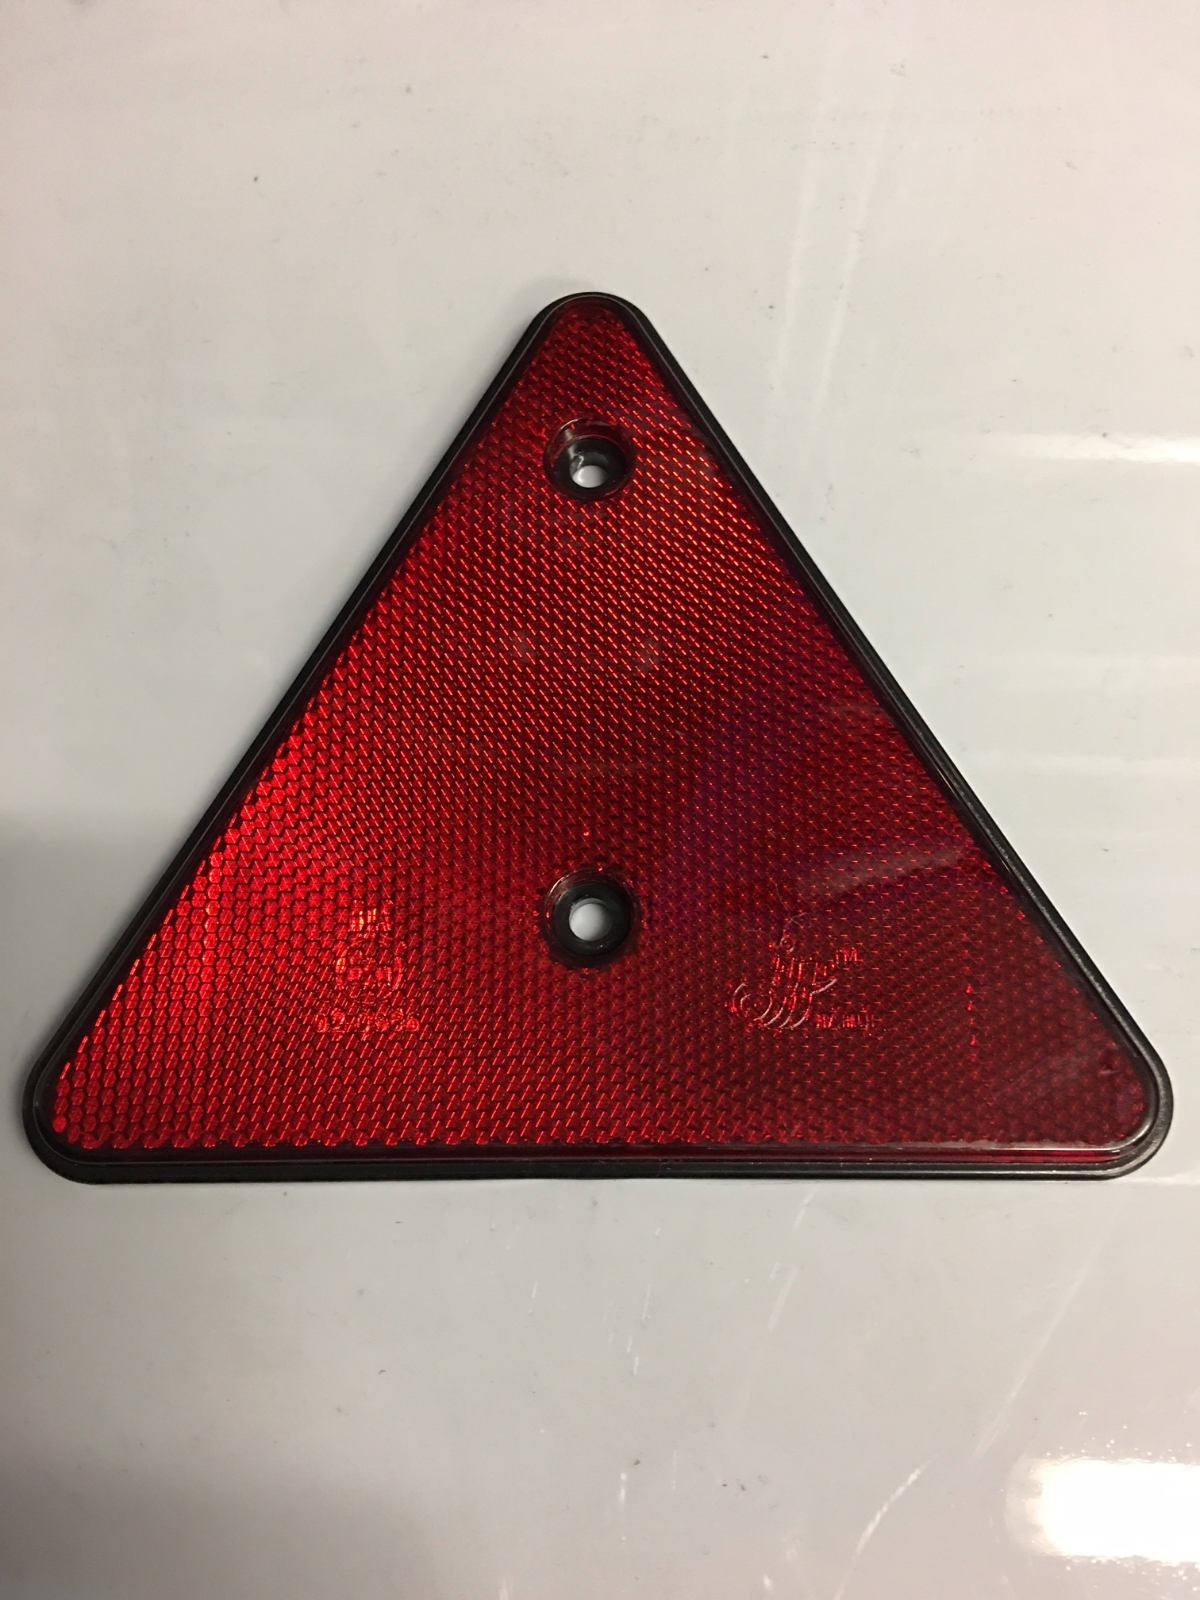 Magnetic Led Stop Tail Indicator Number Plate Lamp Set 10V - 30V Maypole Mp44862 - Mid-Ulster Rotating Electrics Ltd